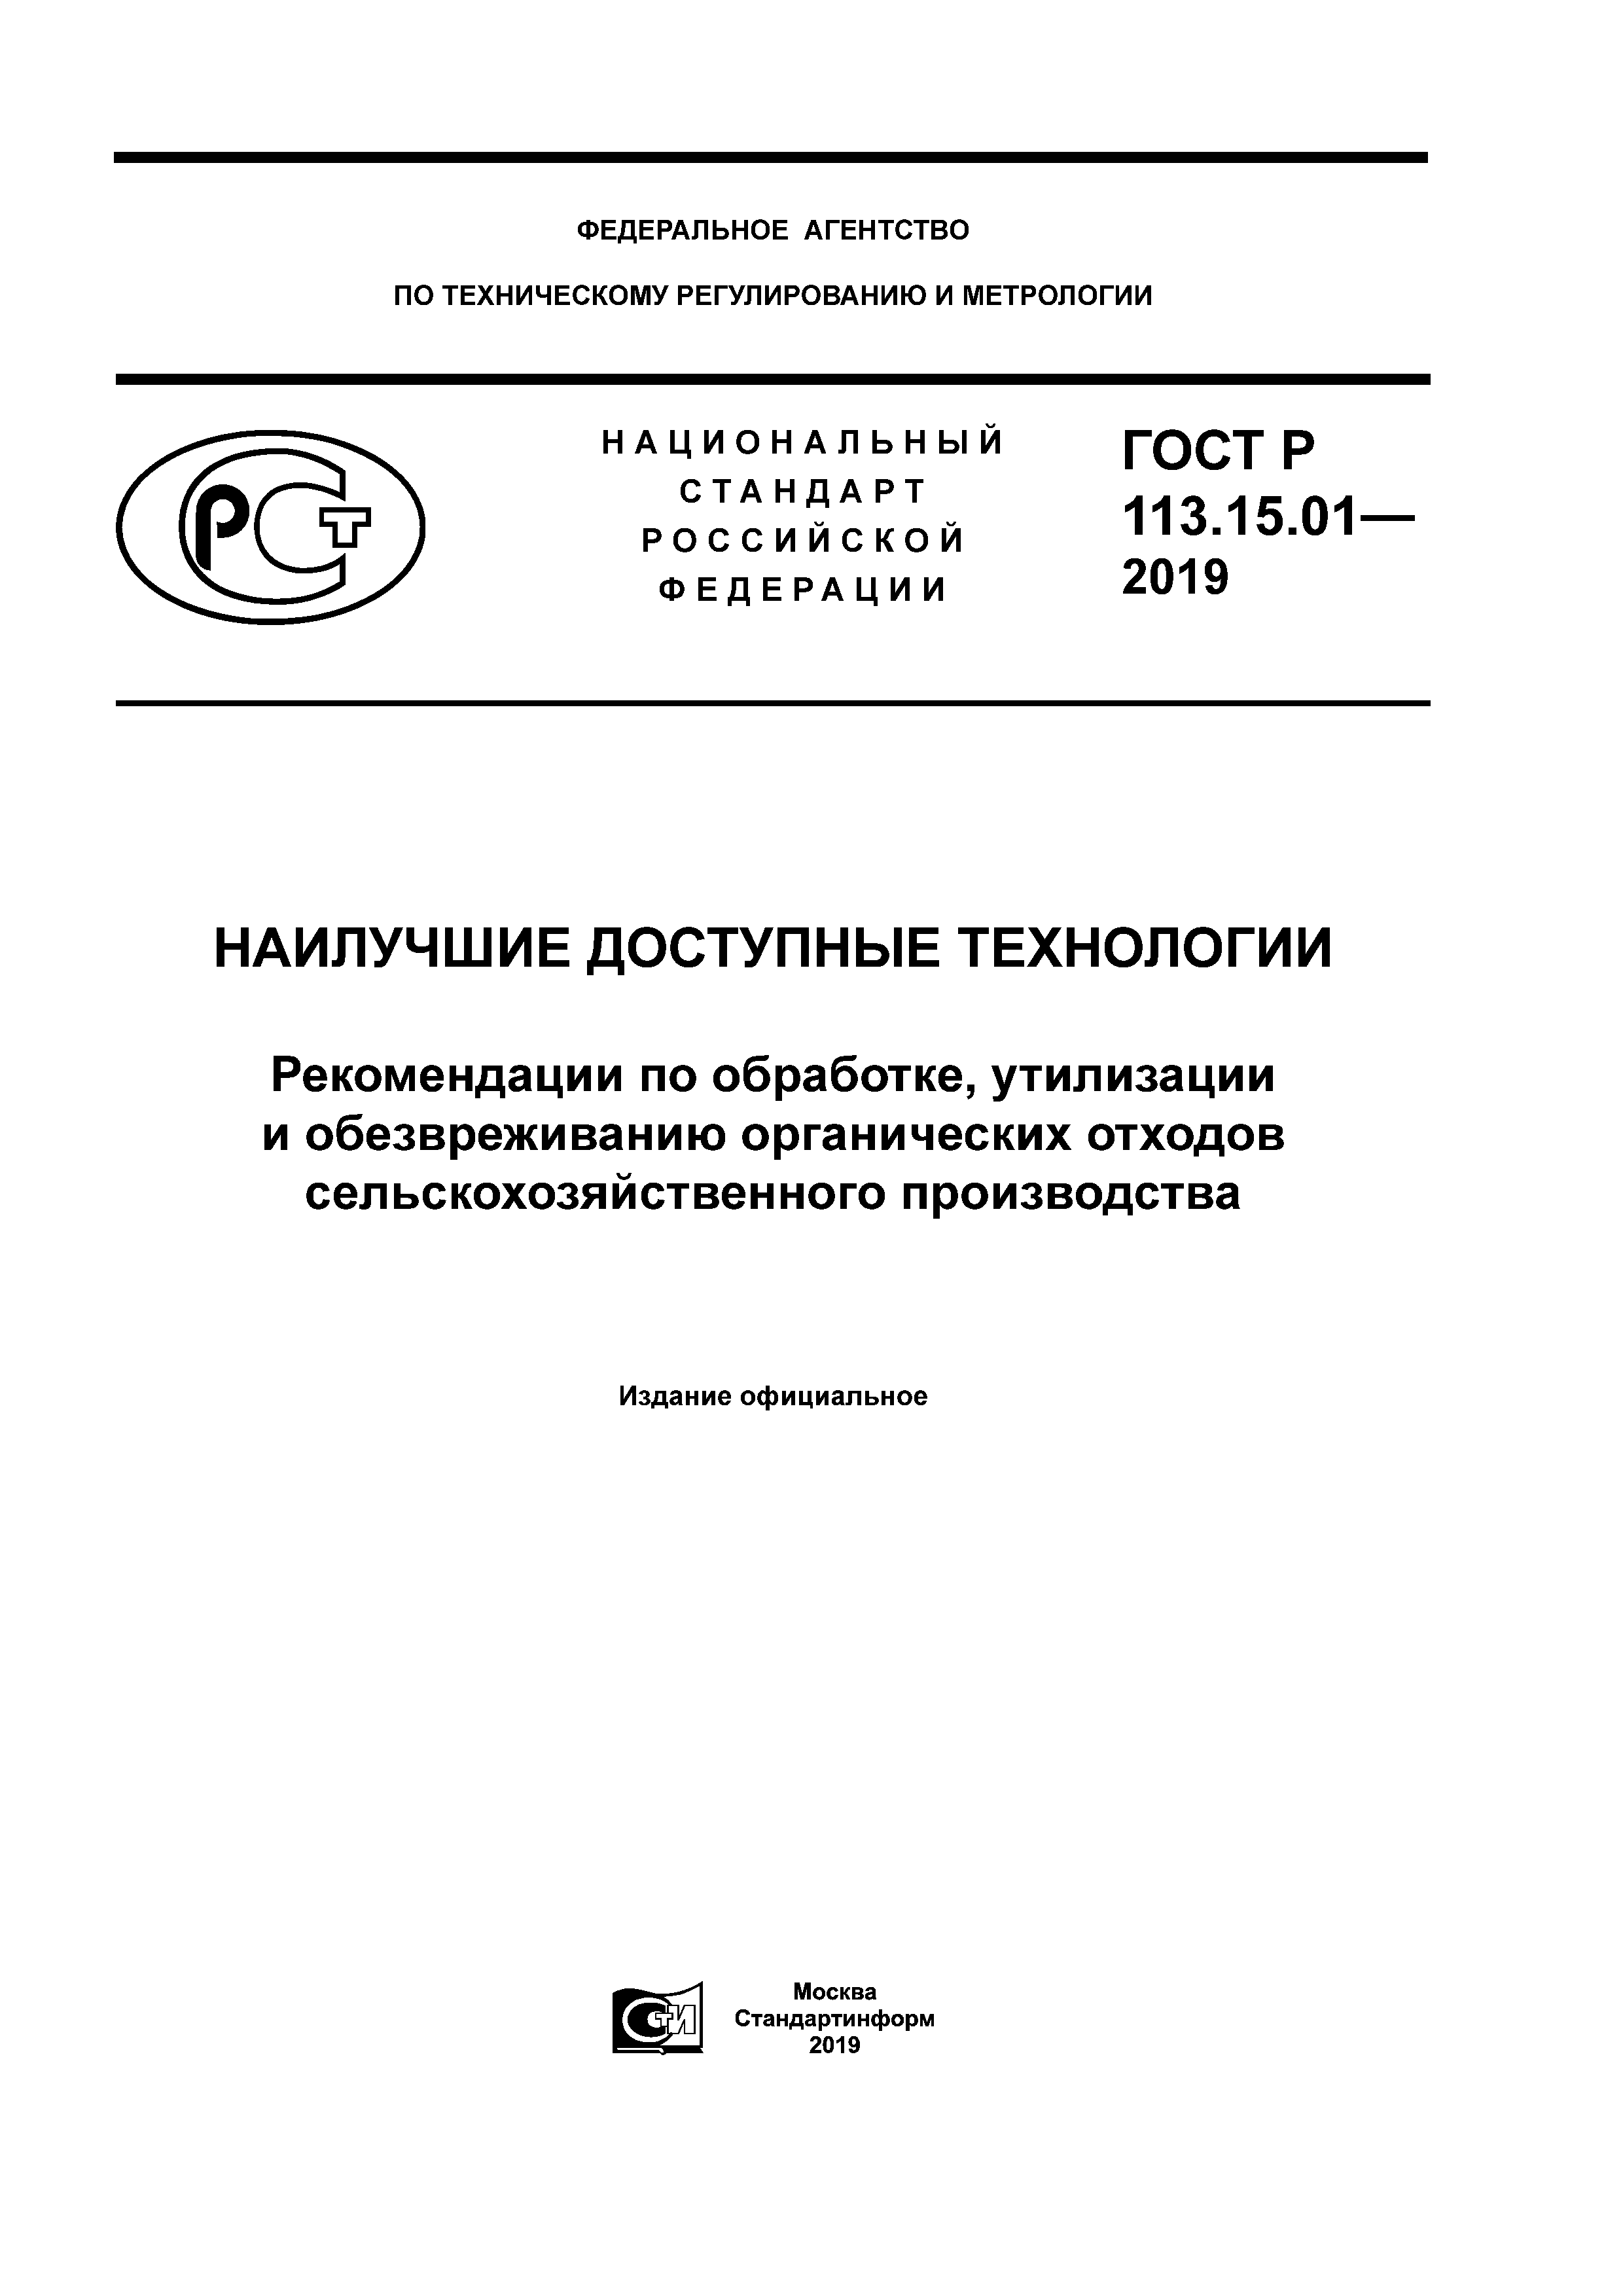 ГОСТ Р 113.15.01-2019